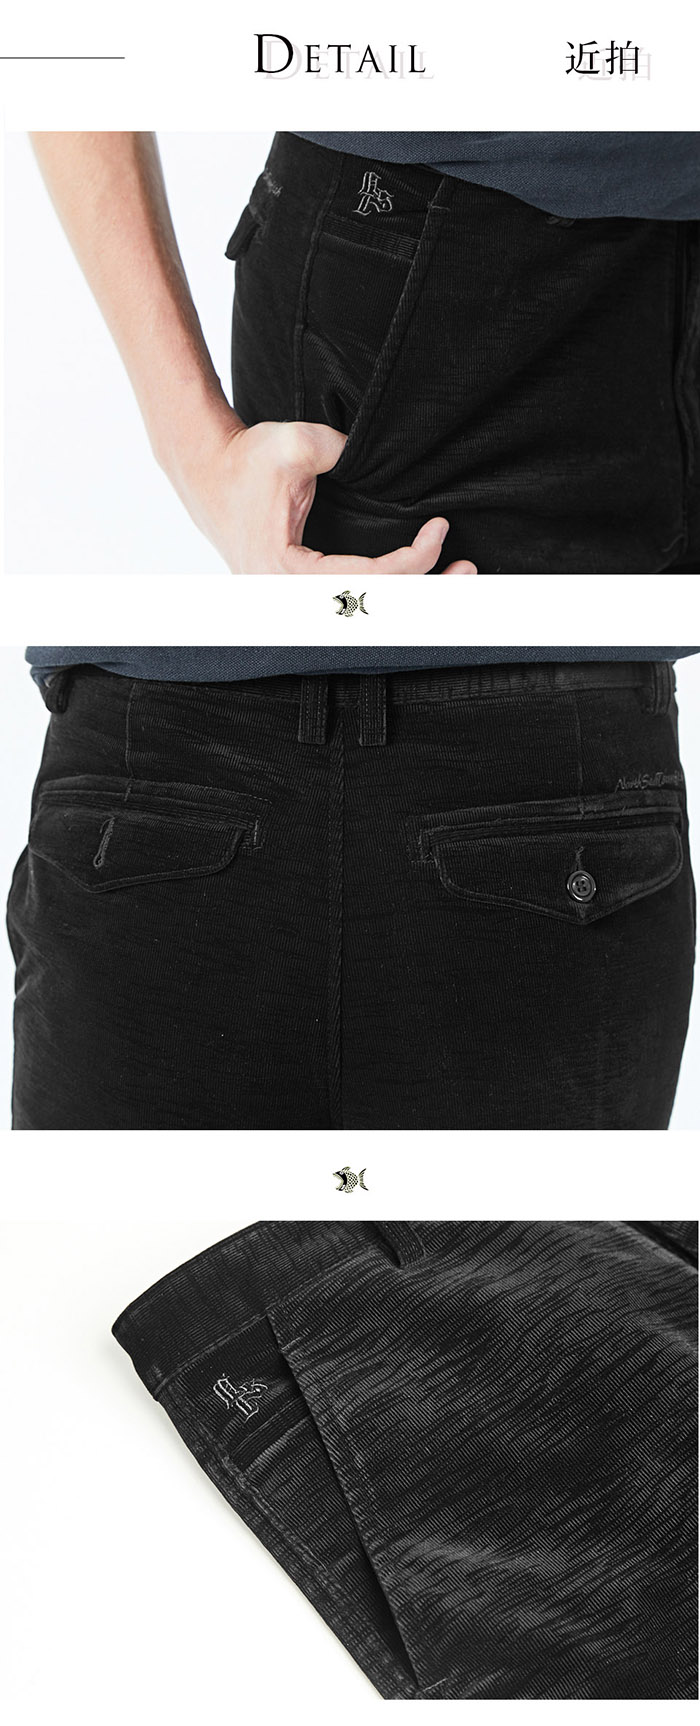 【NST Jeans】男萊卡植絨褲 微光感 黑色橫紋雲 加厚(中腰直筒) 396(66616) 台製 紳士 保暖